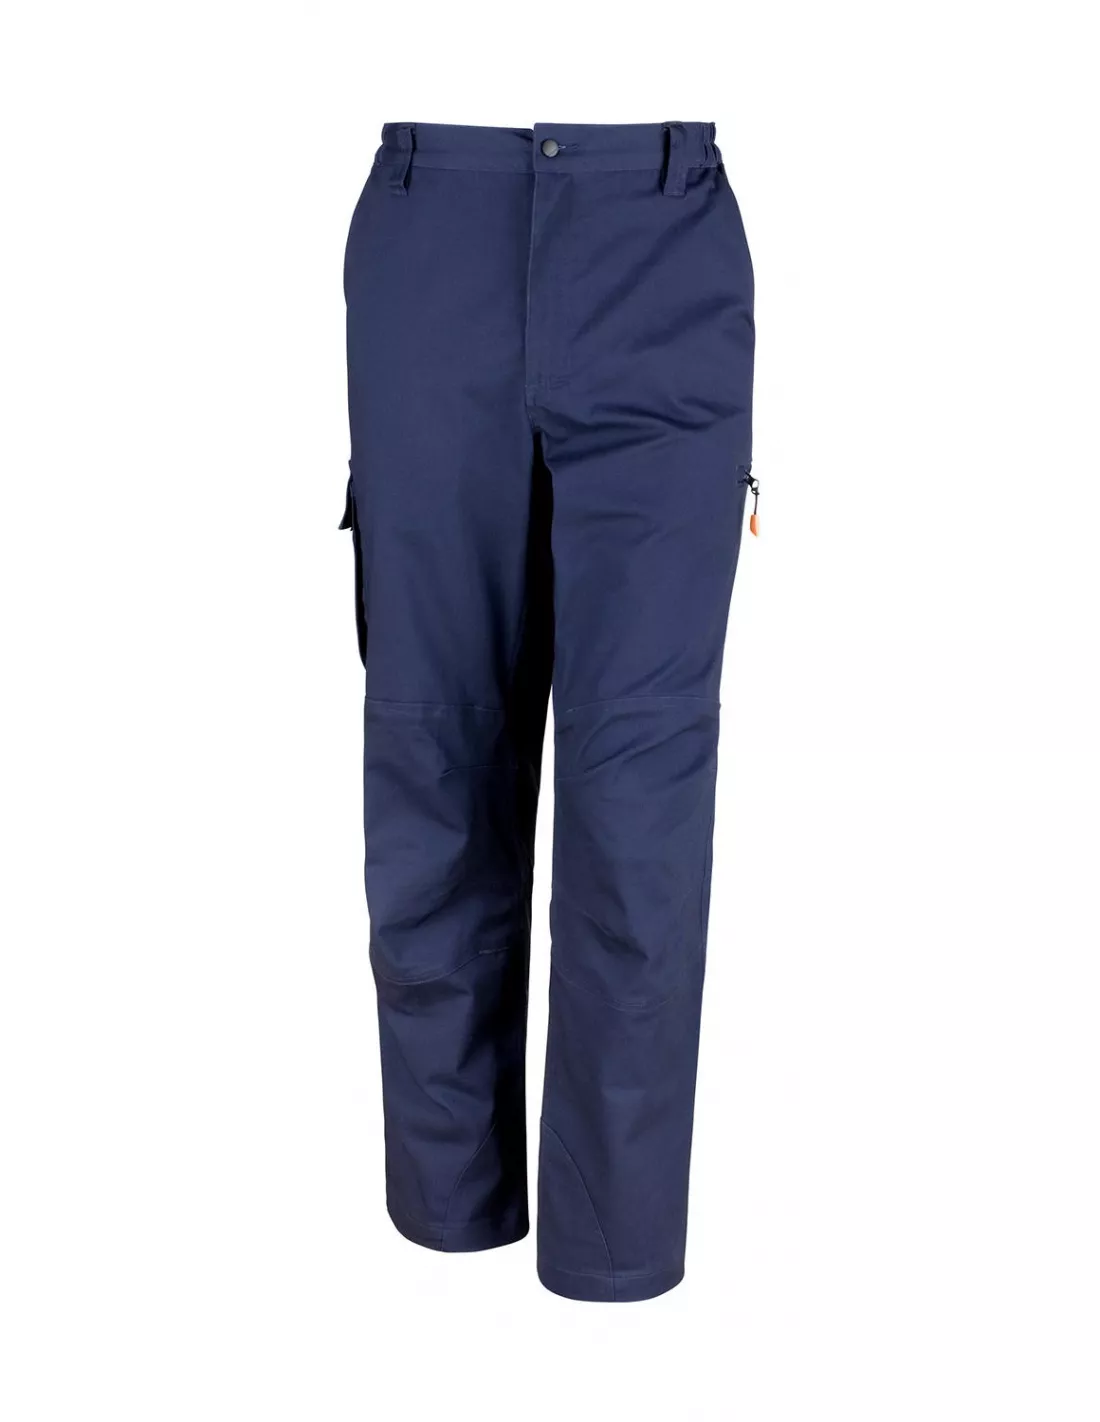 Pantalón ajustado Work Guard (largo)